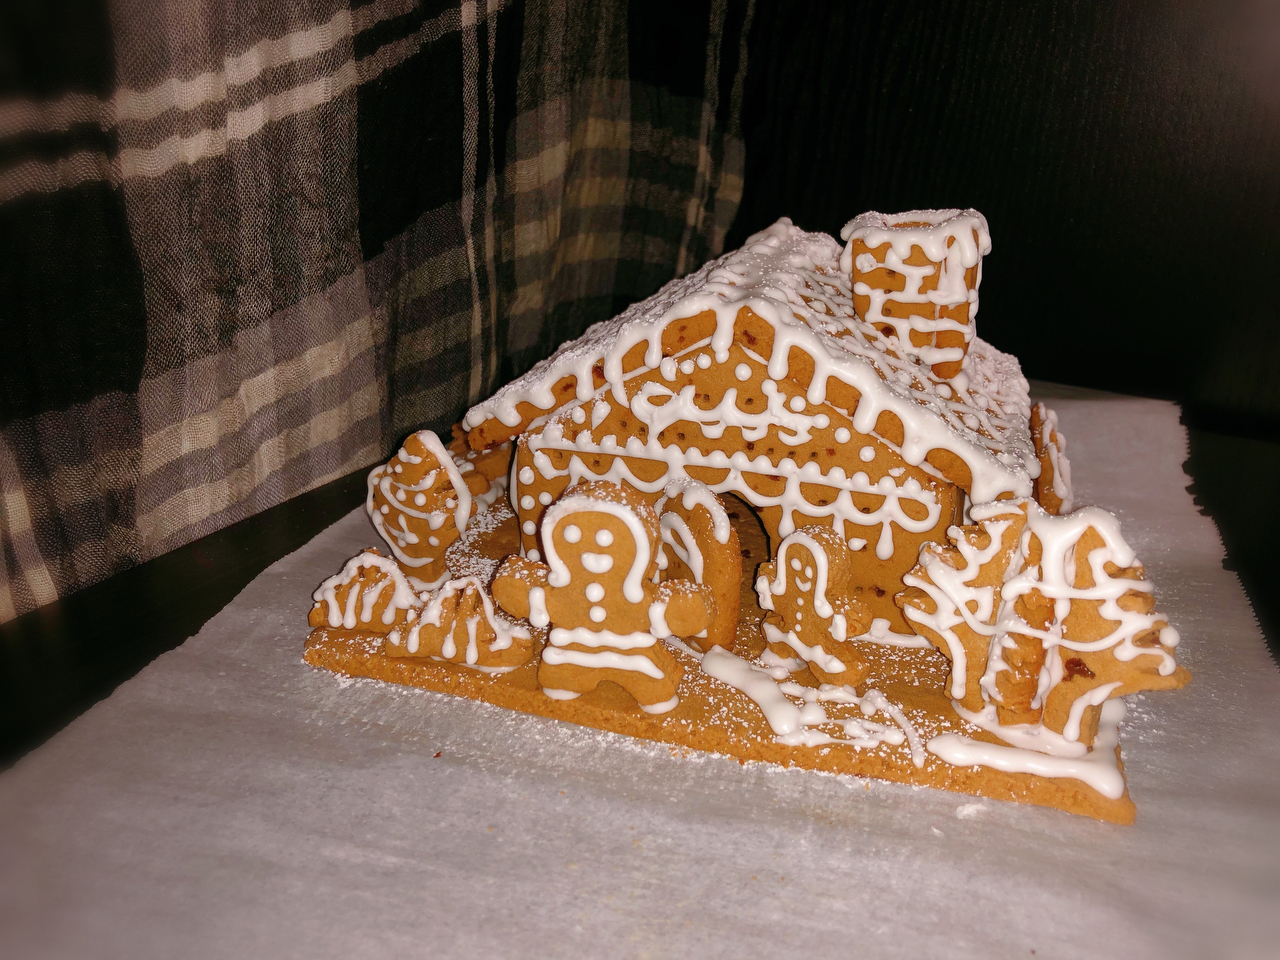 姜饼屋 gingerbread house（视频菜谱）